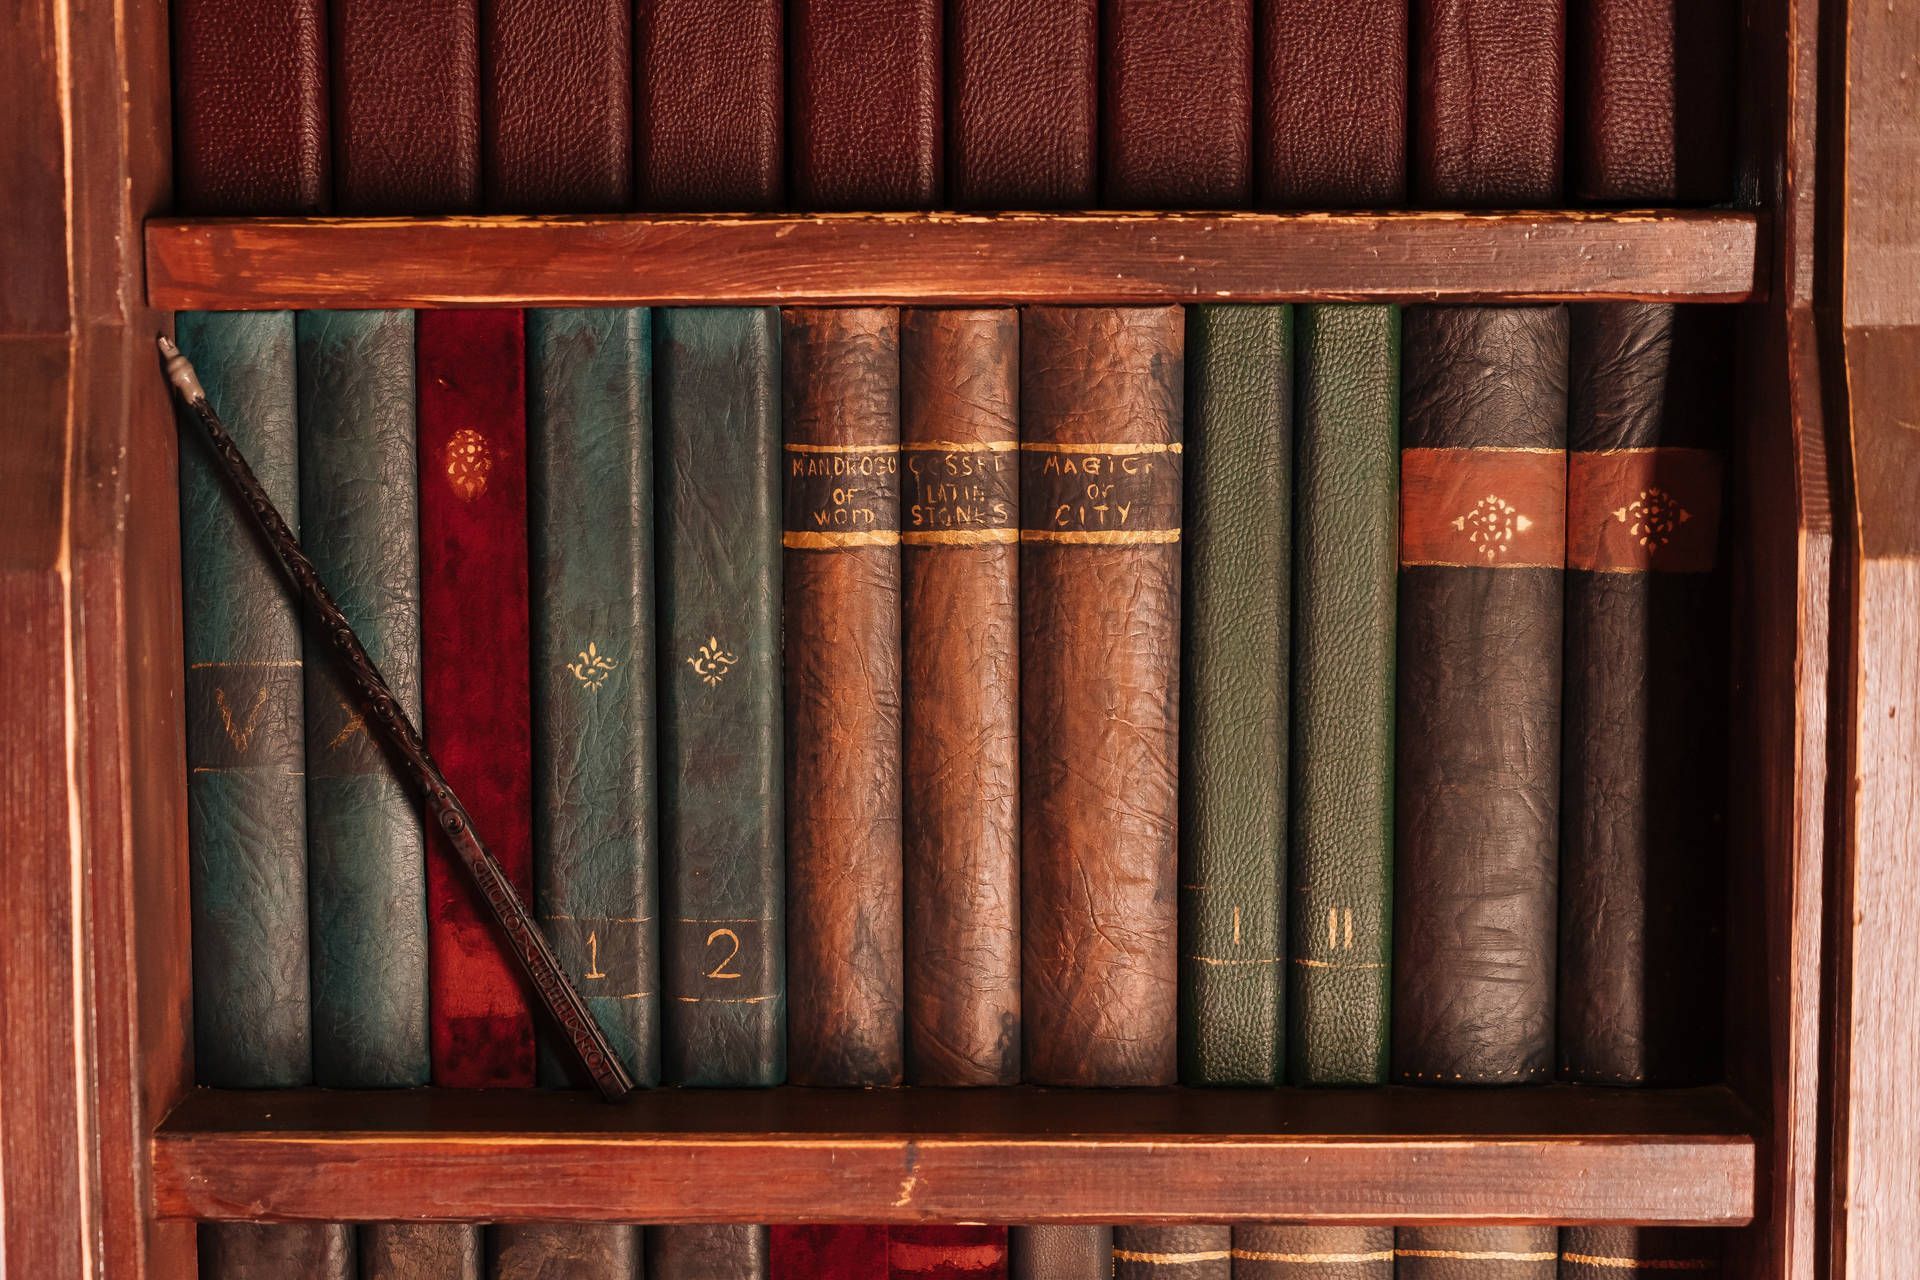 A book shelf with many books on it - Bookshelf